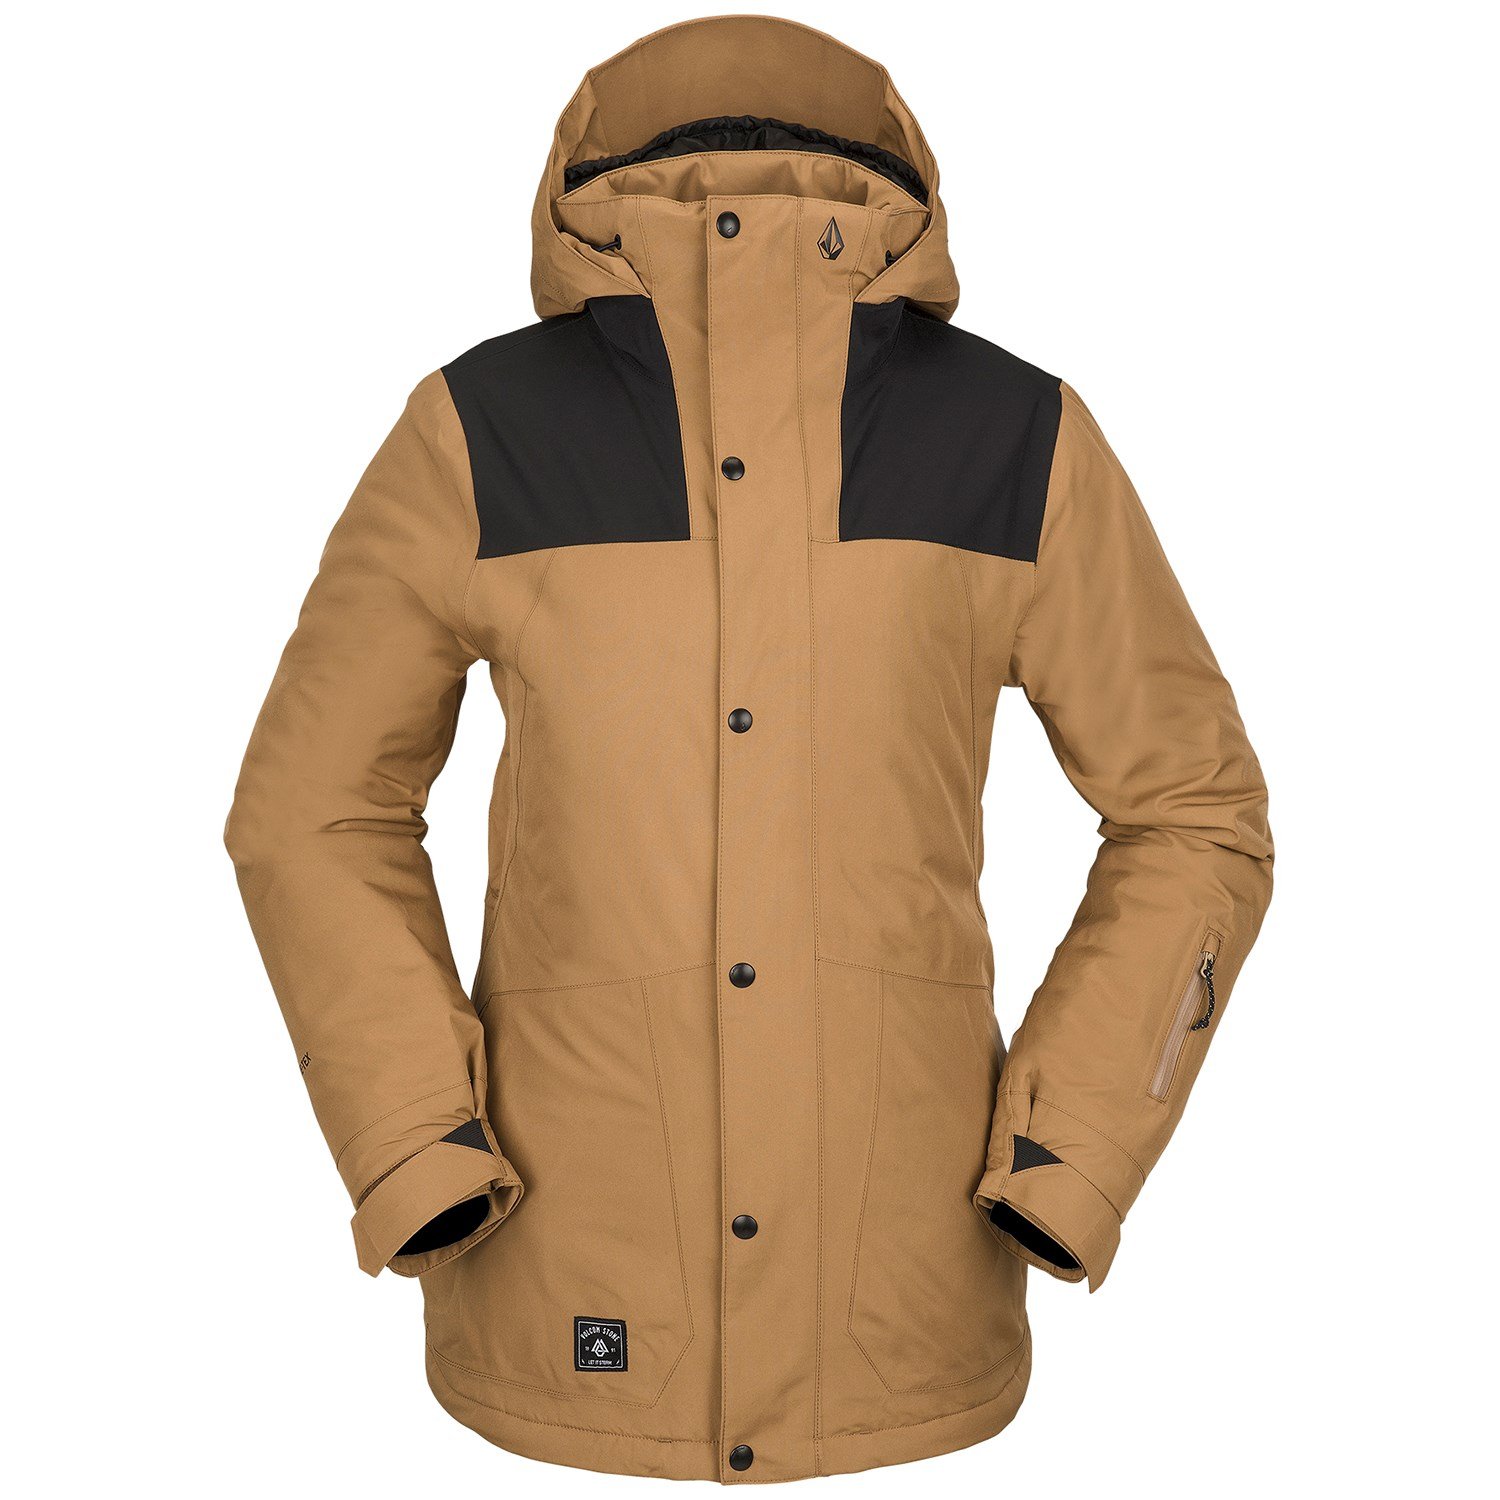 Утепленная куртка Volcom Ell Insulated GORE-TEX